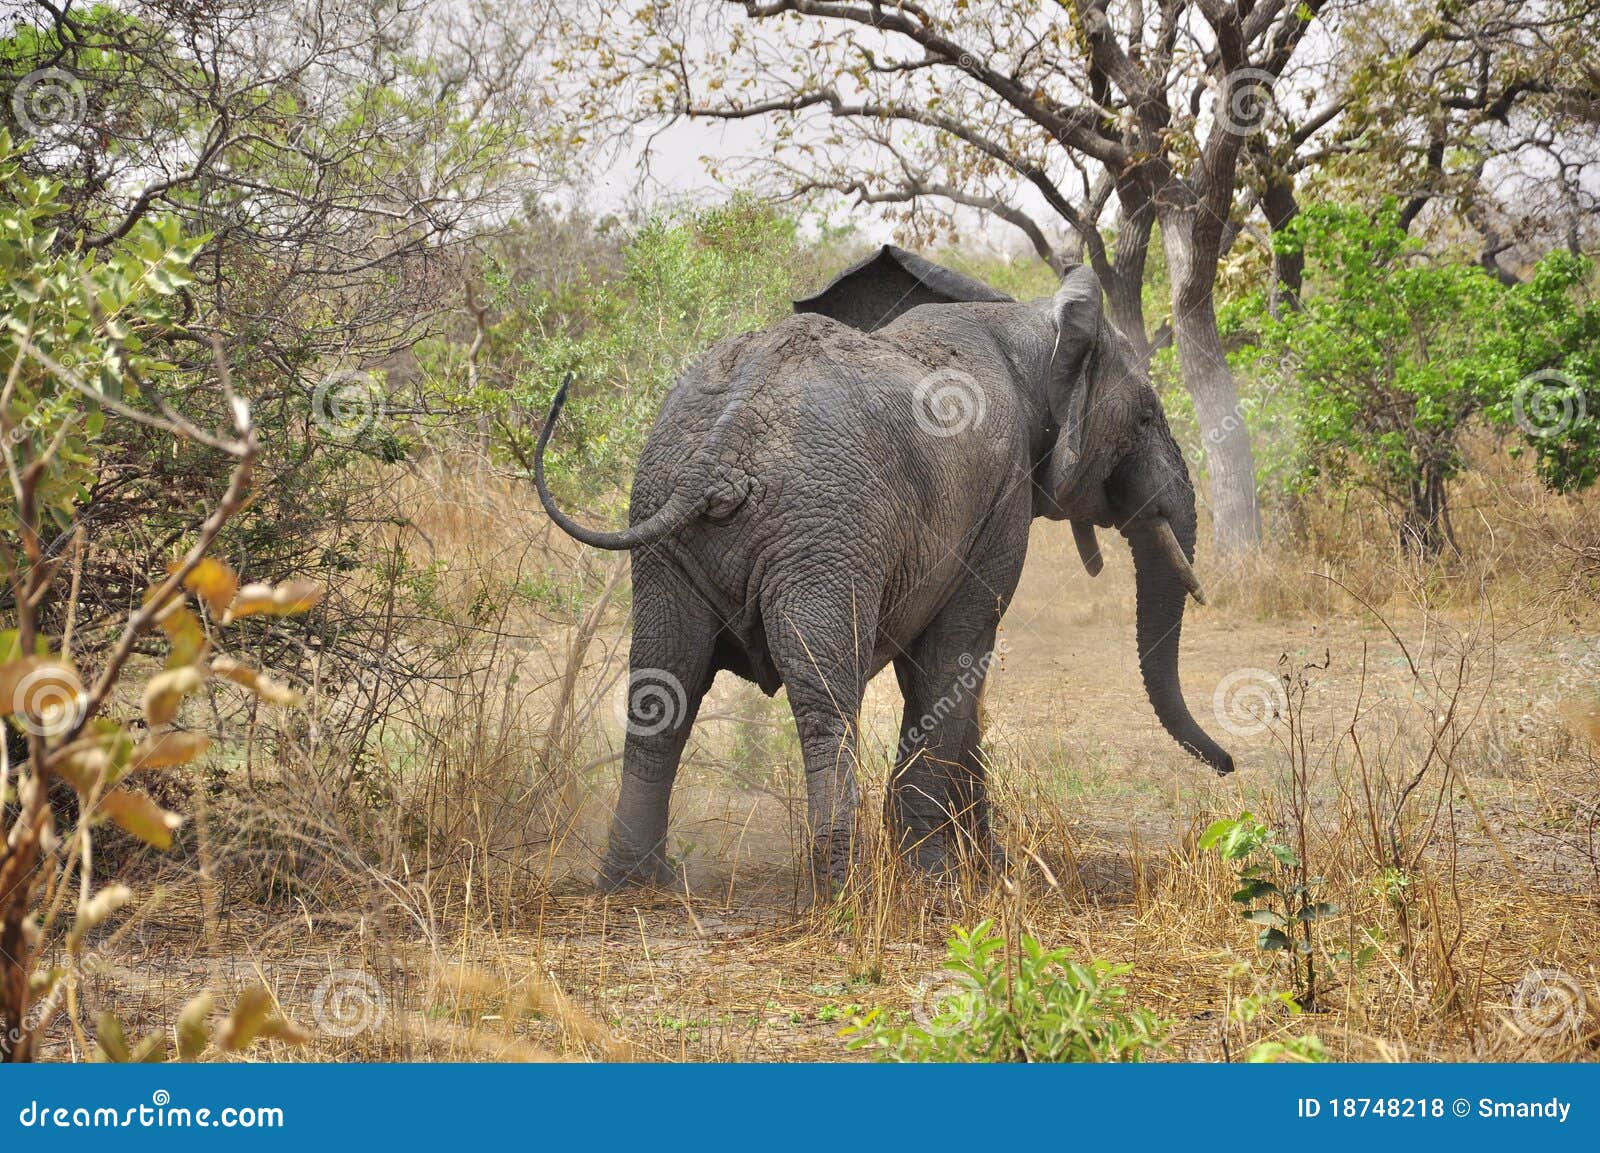 furious elephant